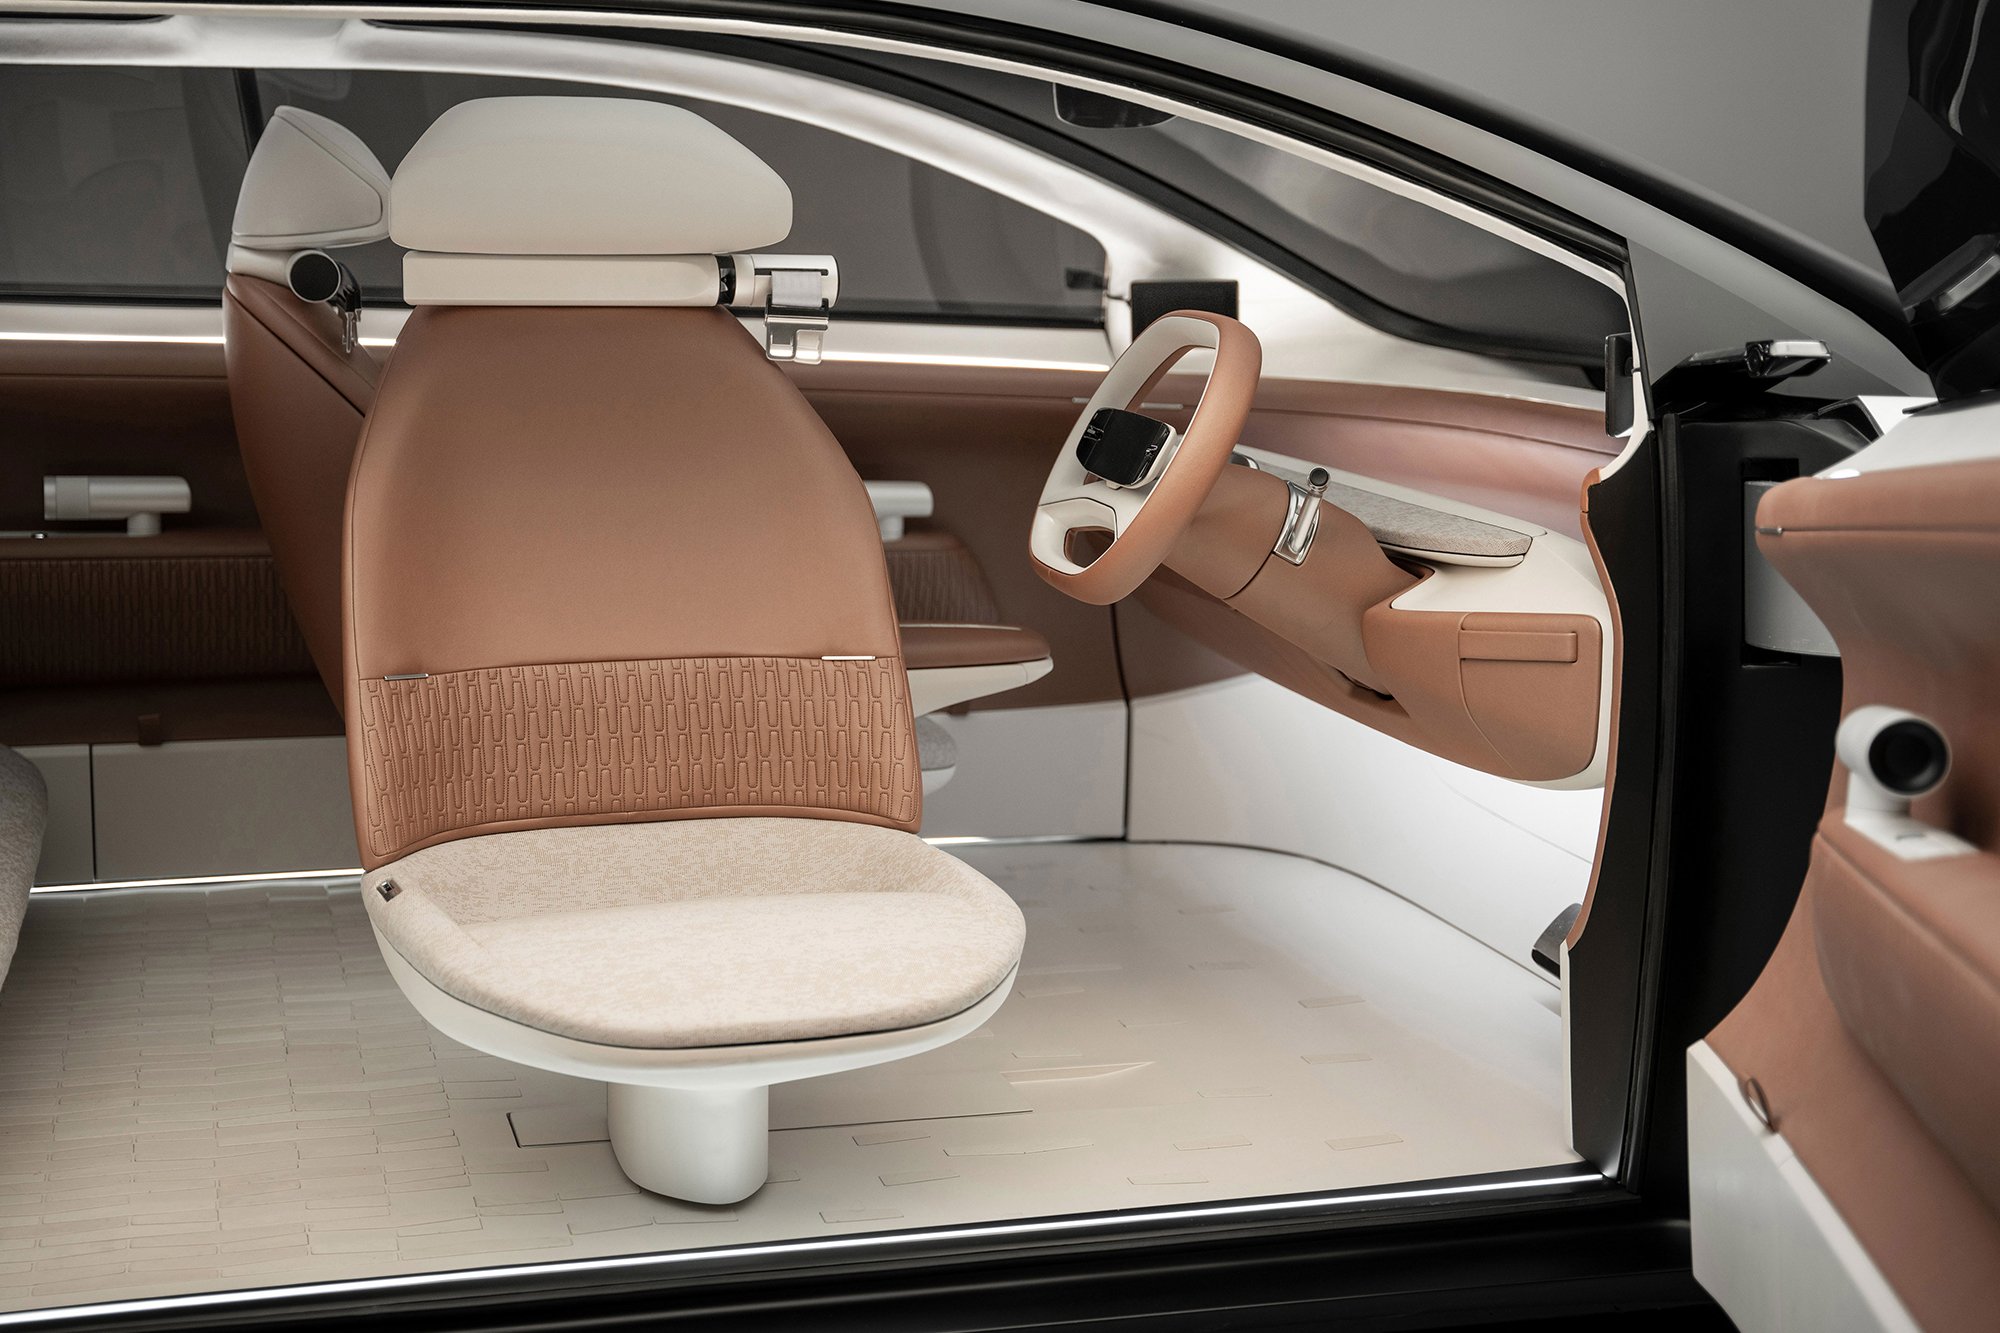 The new seats and interior design of Tata Motor's concept car Avinya